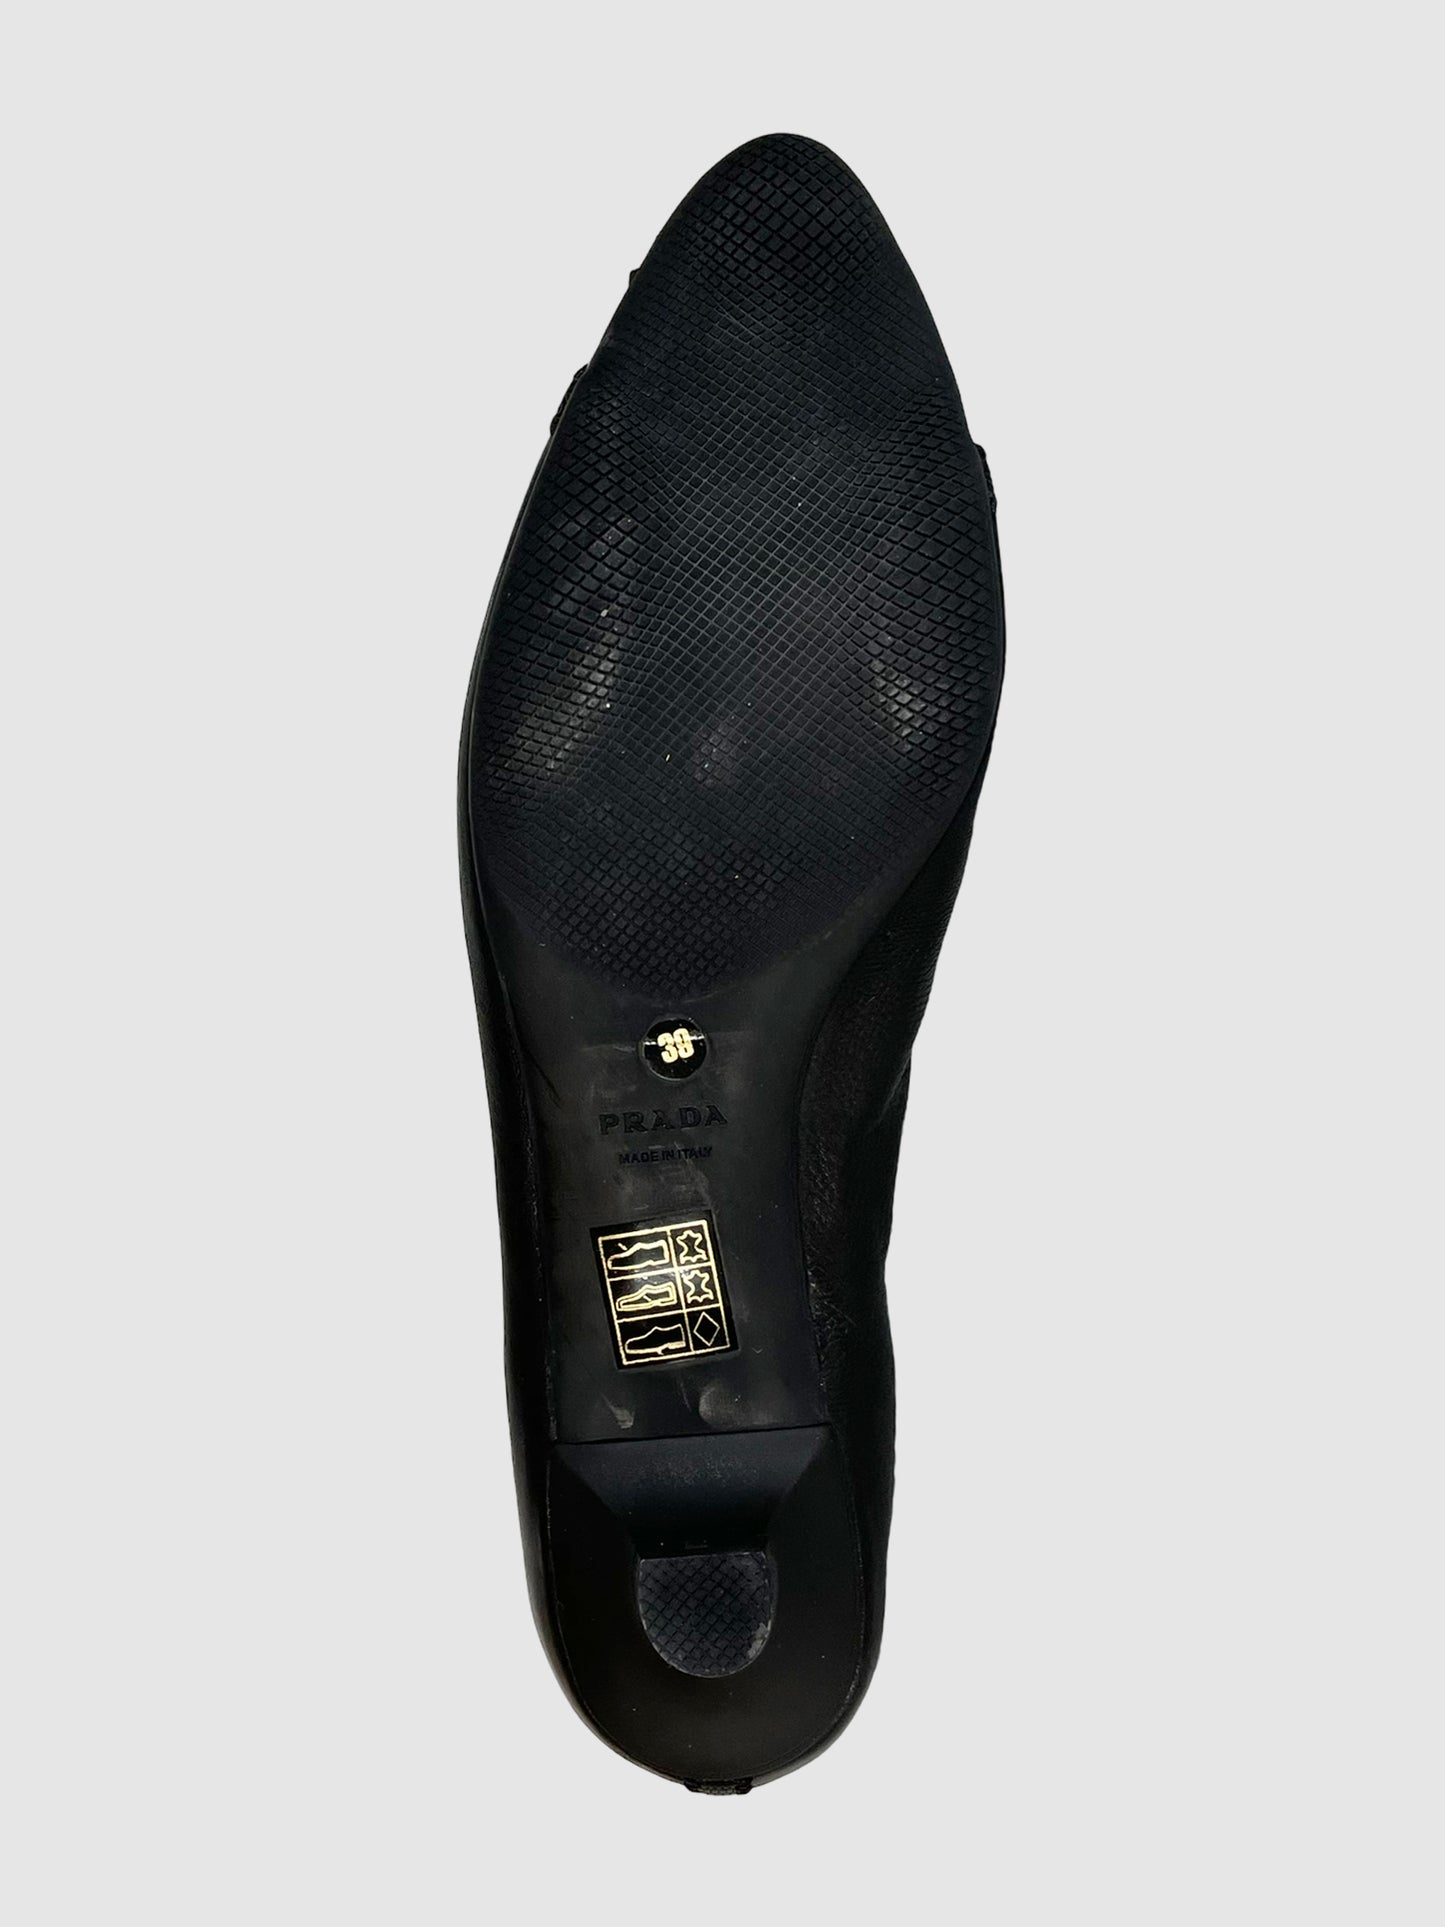 Prada Sport Leather Kitten Heel - Size 39